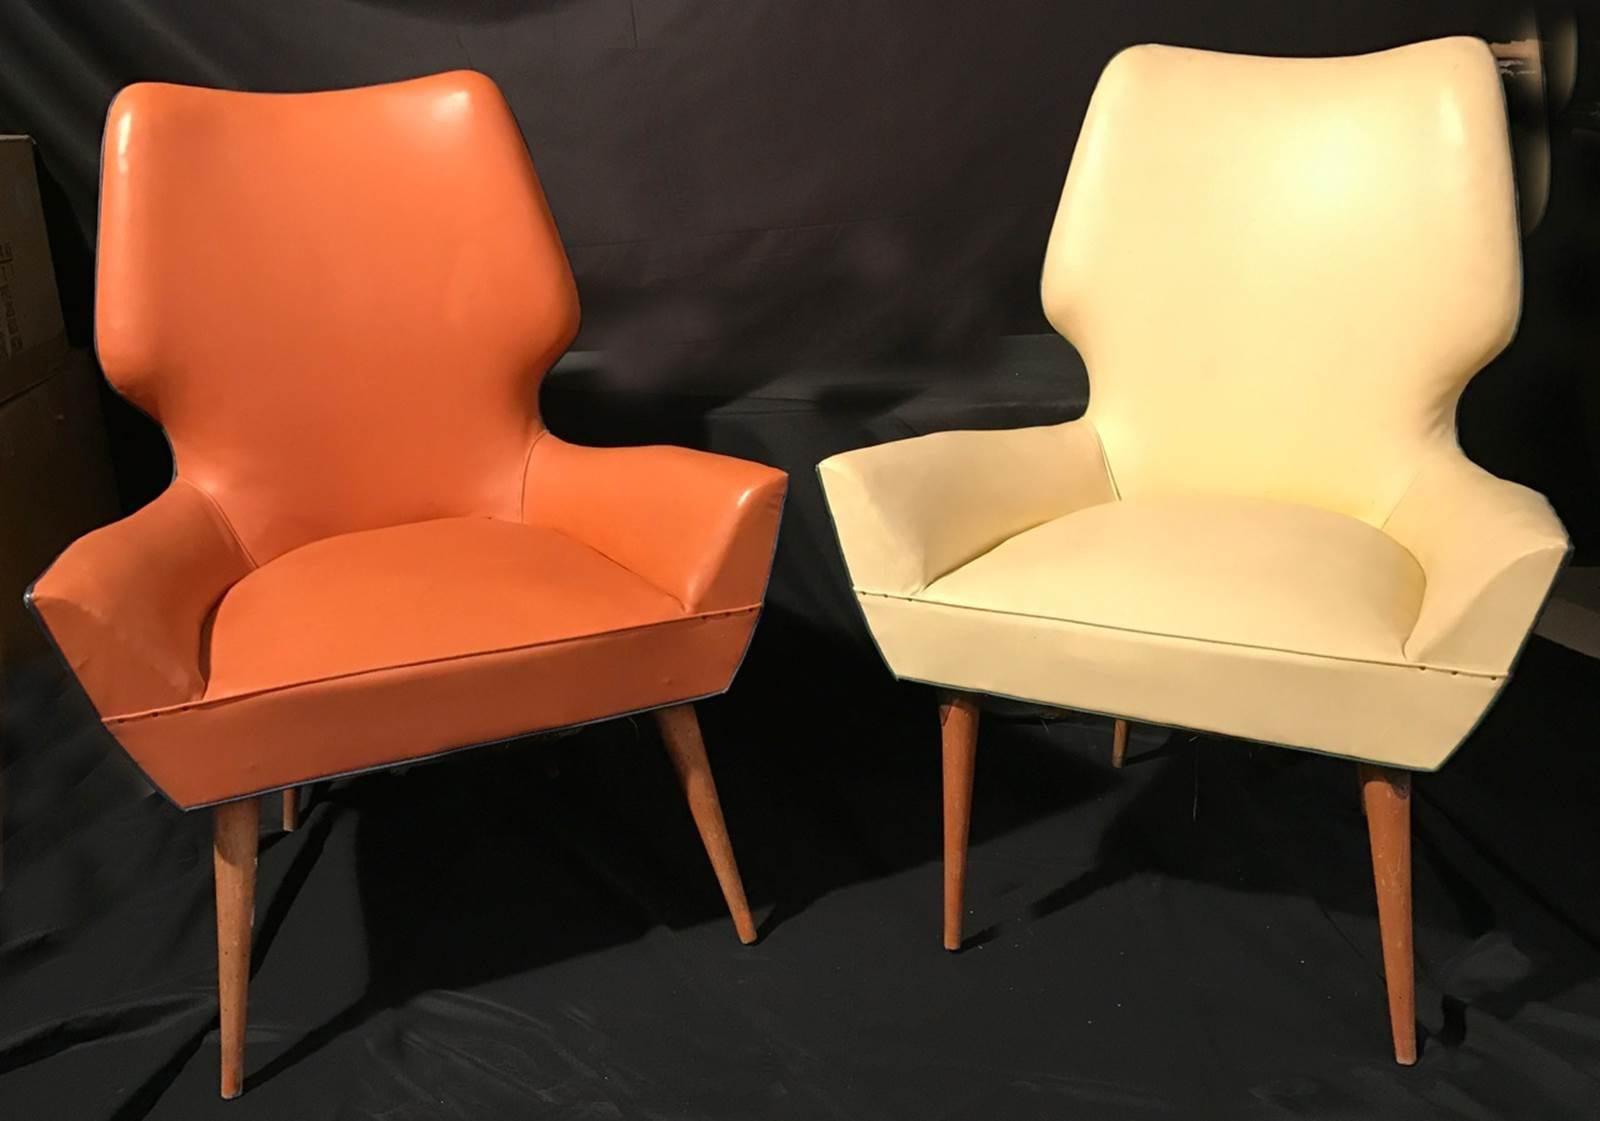 Wood Pair of Mid-Century Modern Gio Ponti Style Chairs, 1950s